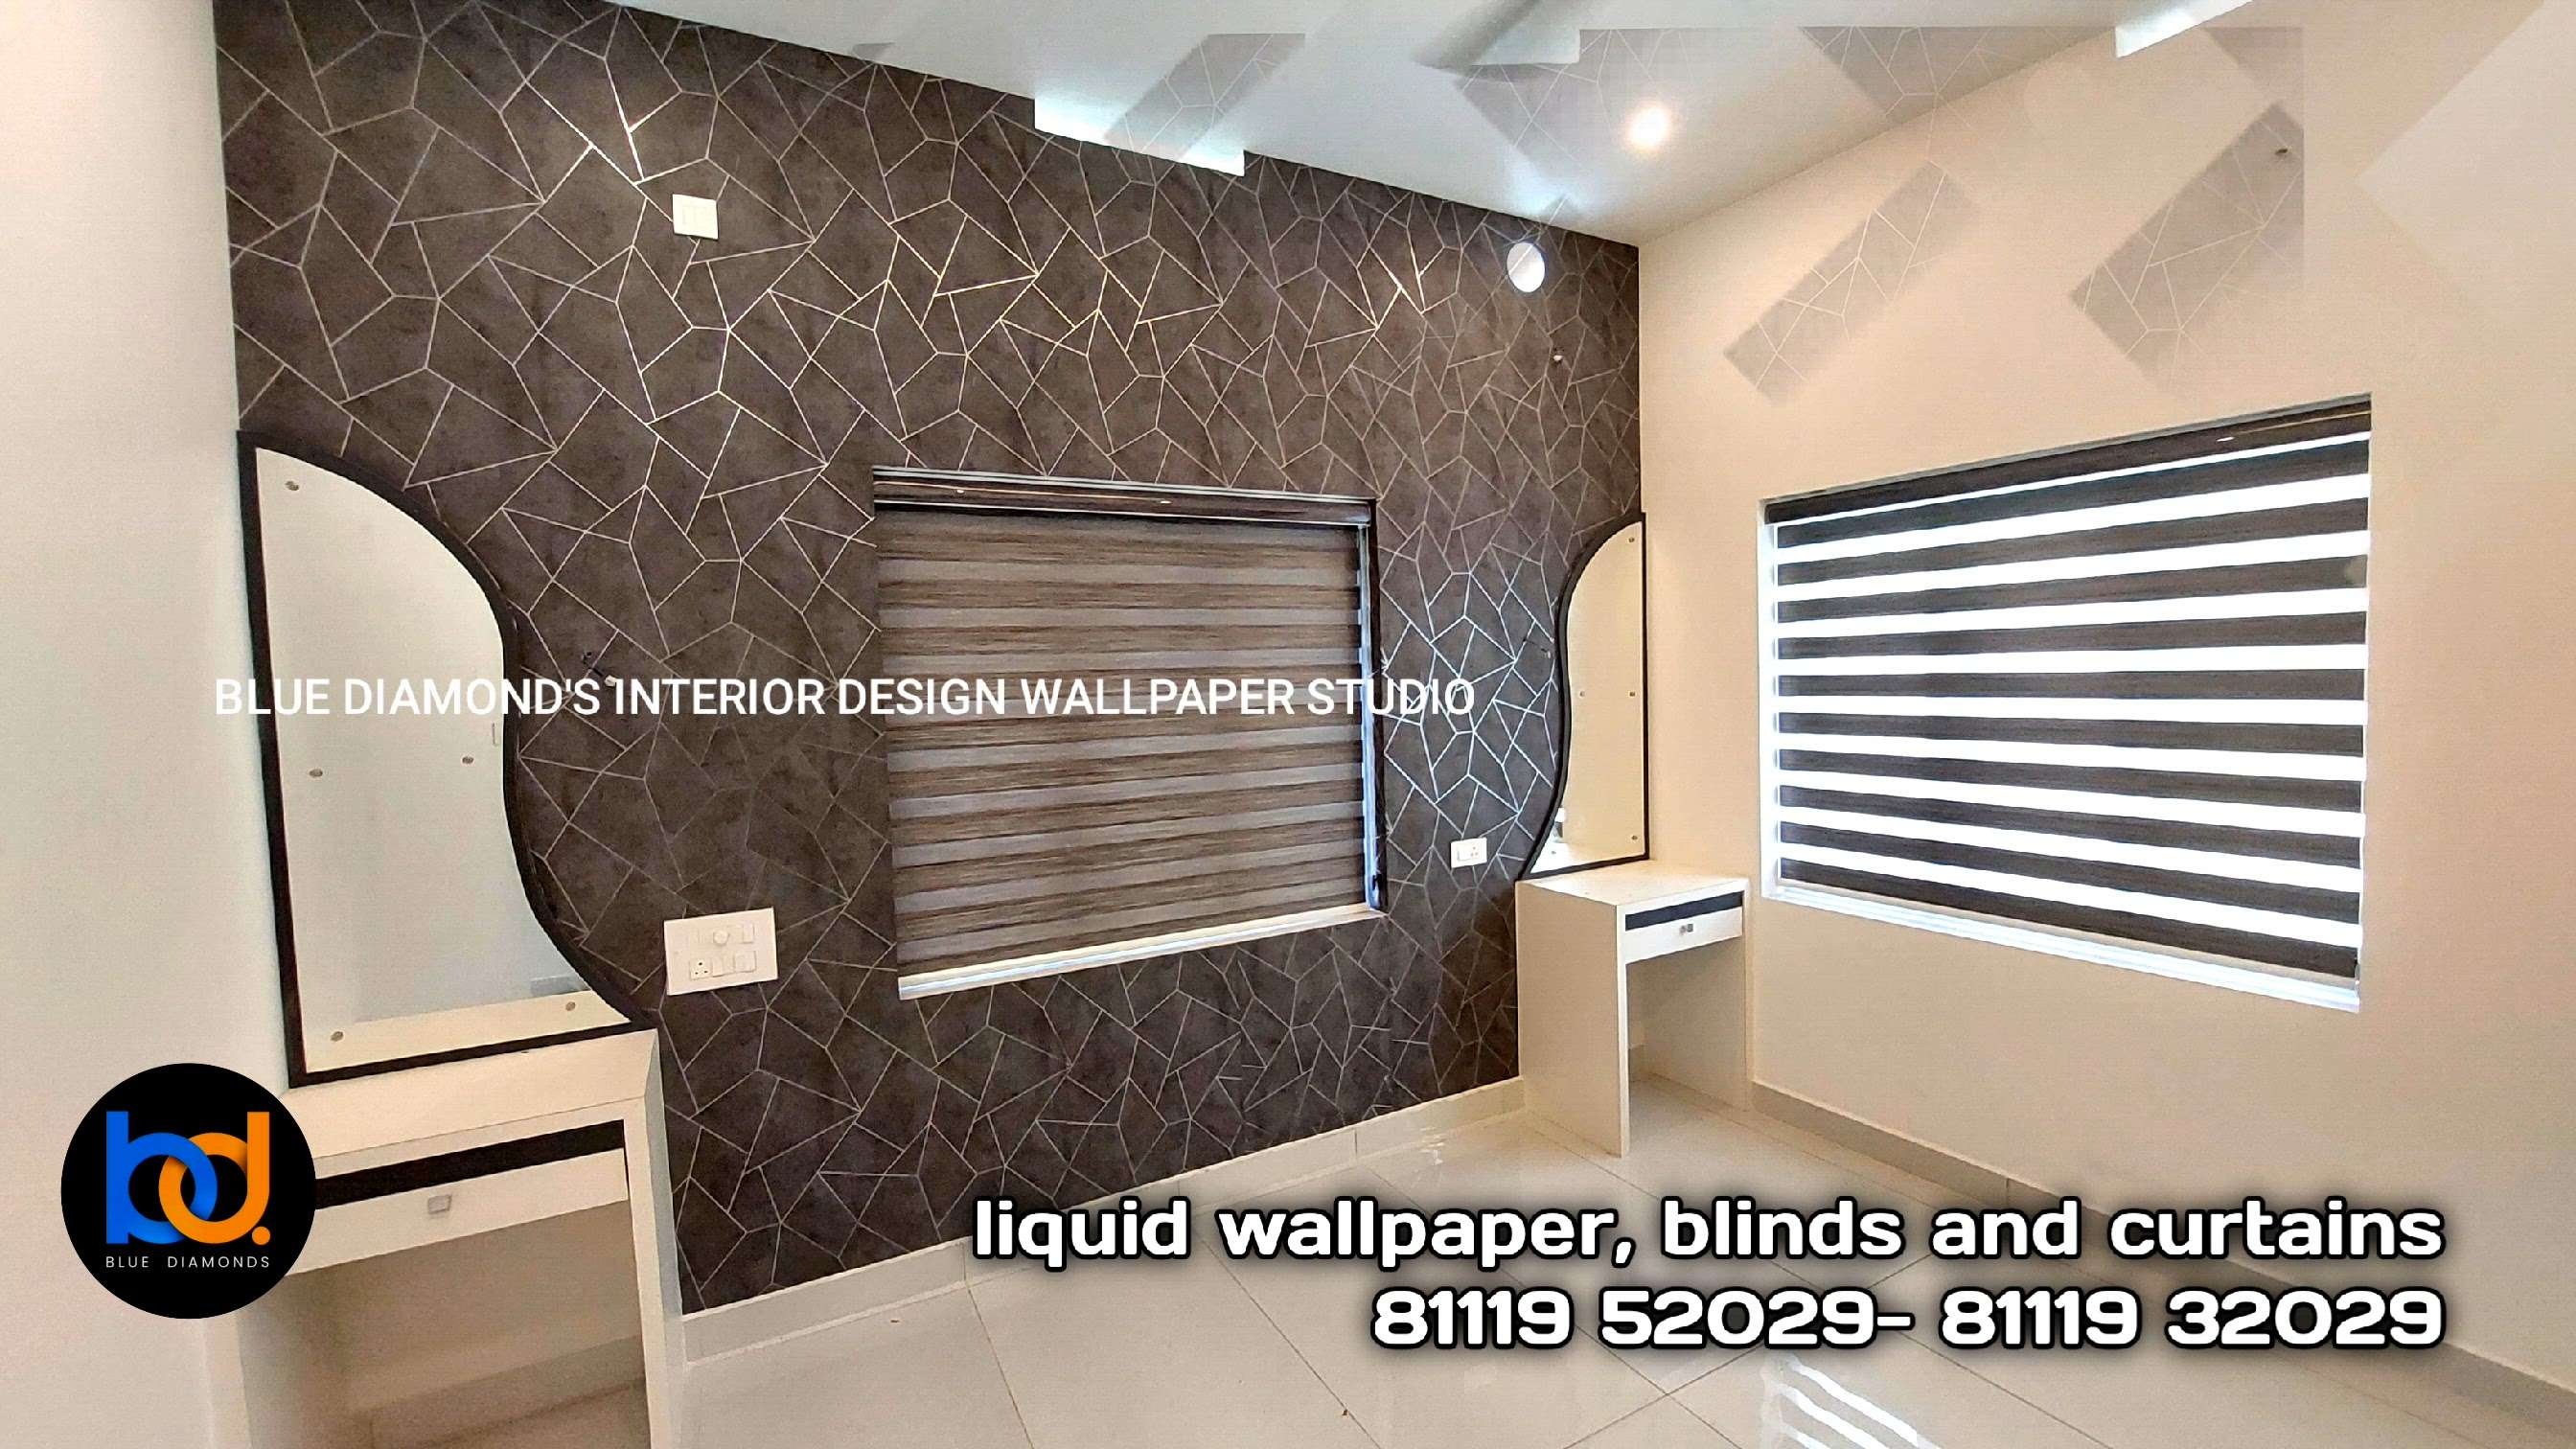 wallpaper, blinds and curtains installation moonupeedika 81119 32029 81119 5 2029